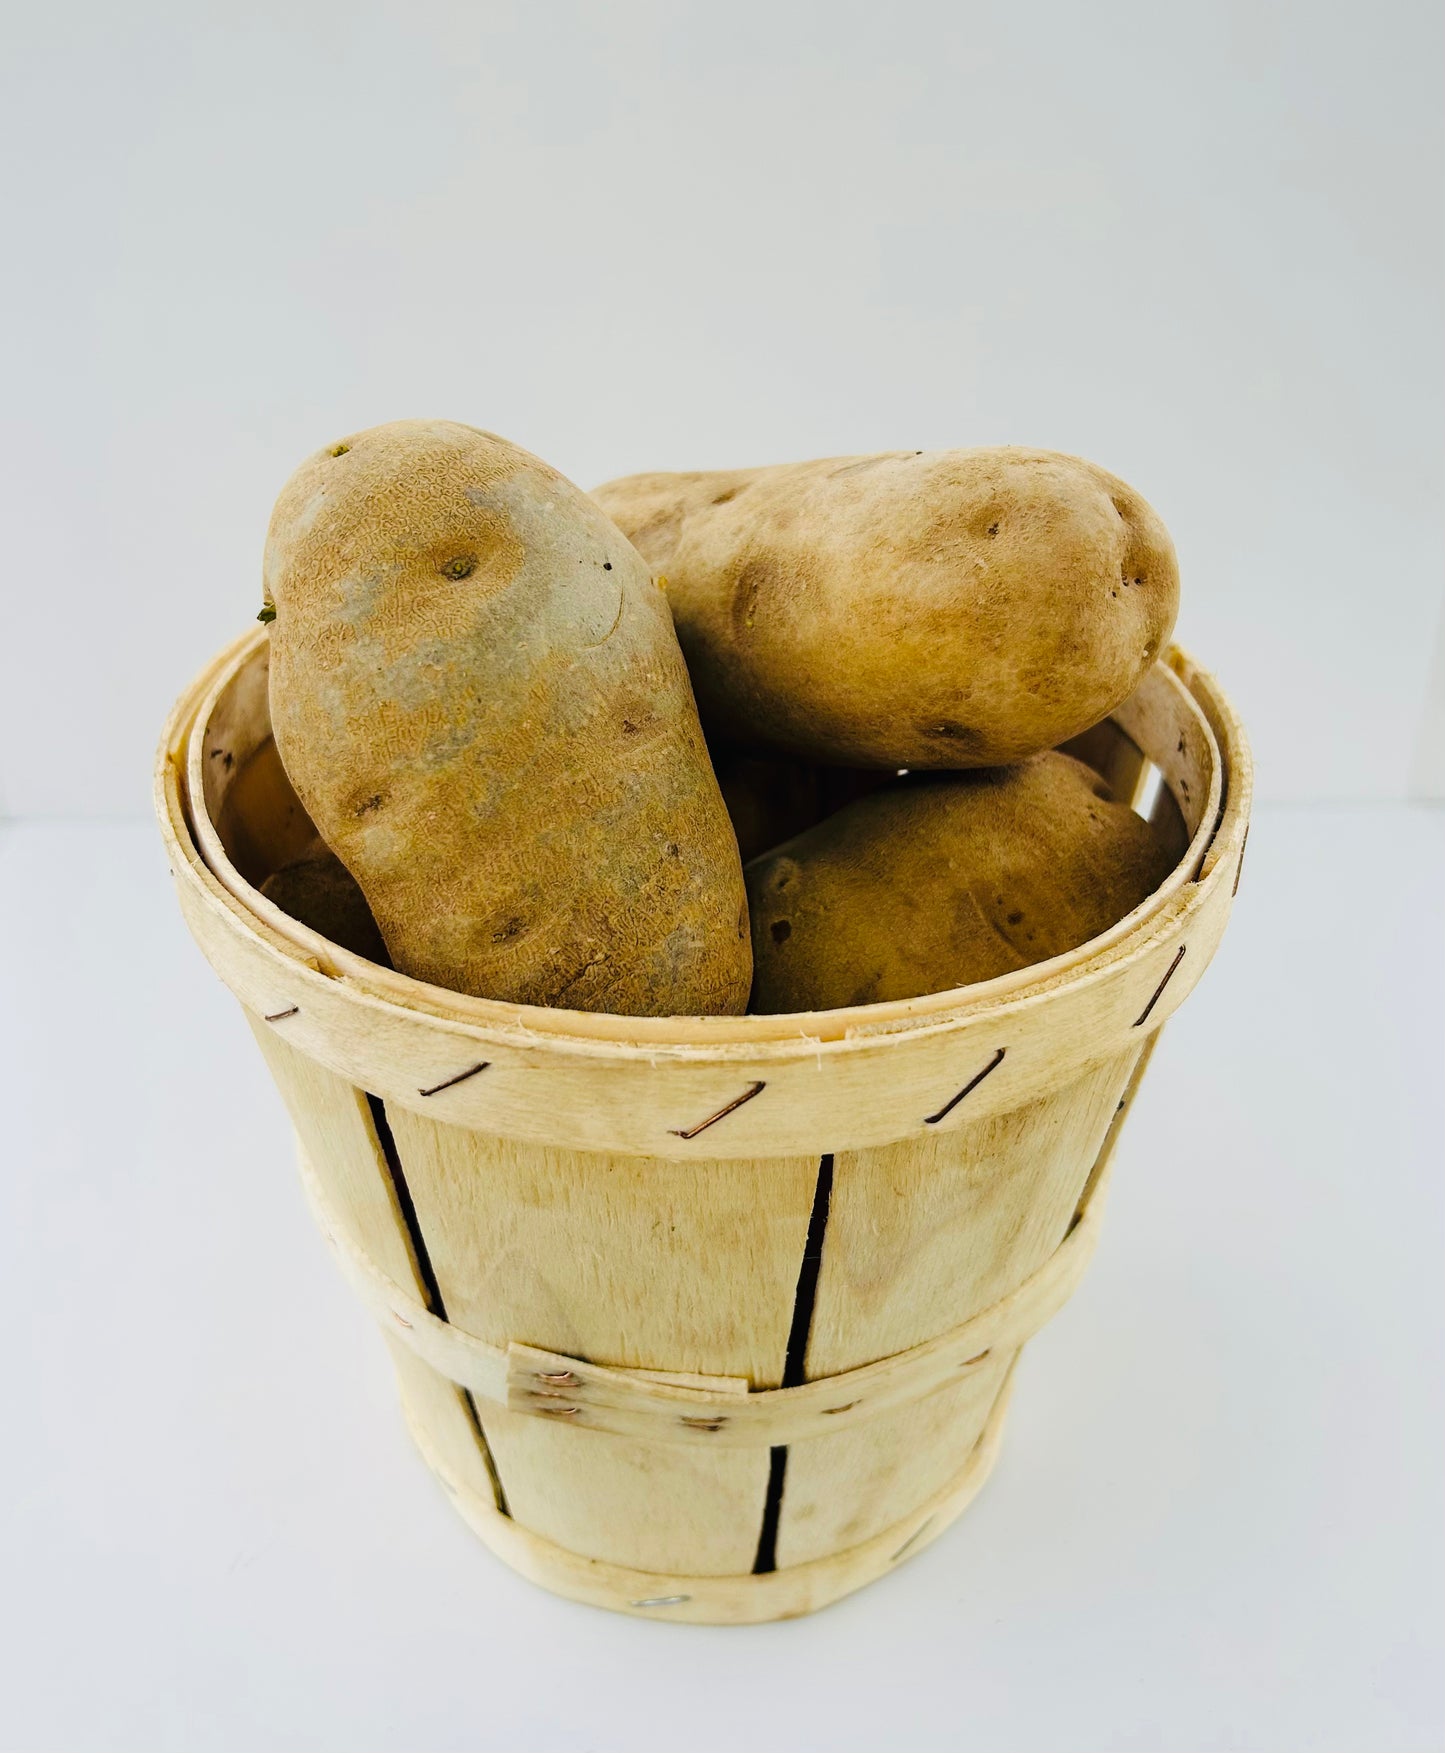 Potatoes: Russet